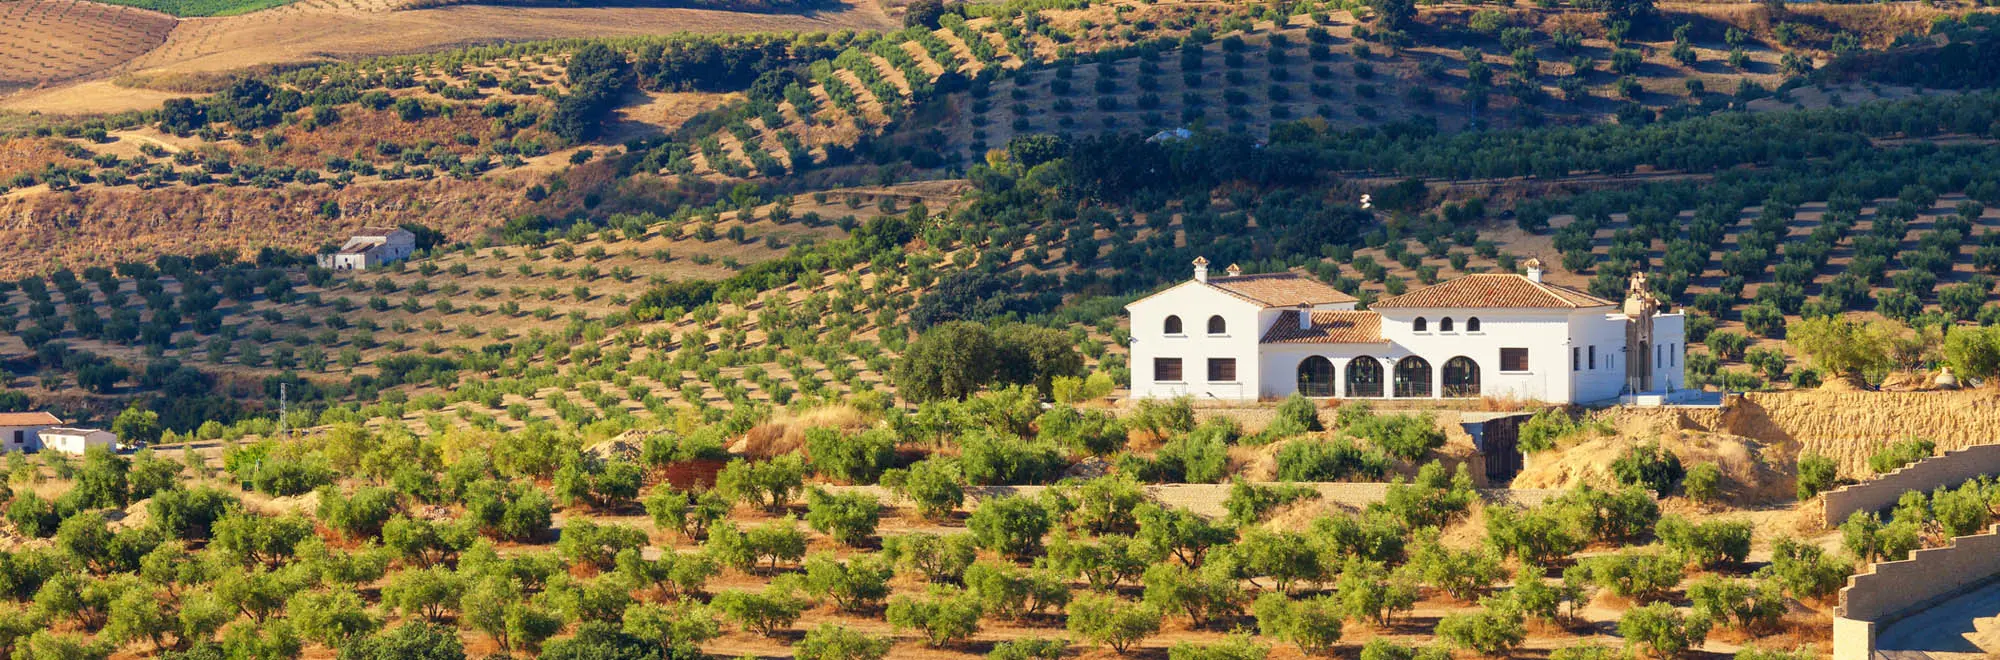 Types of Spanish olive trees